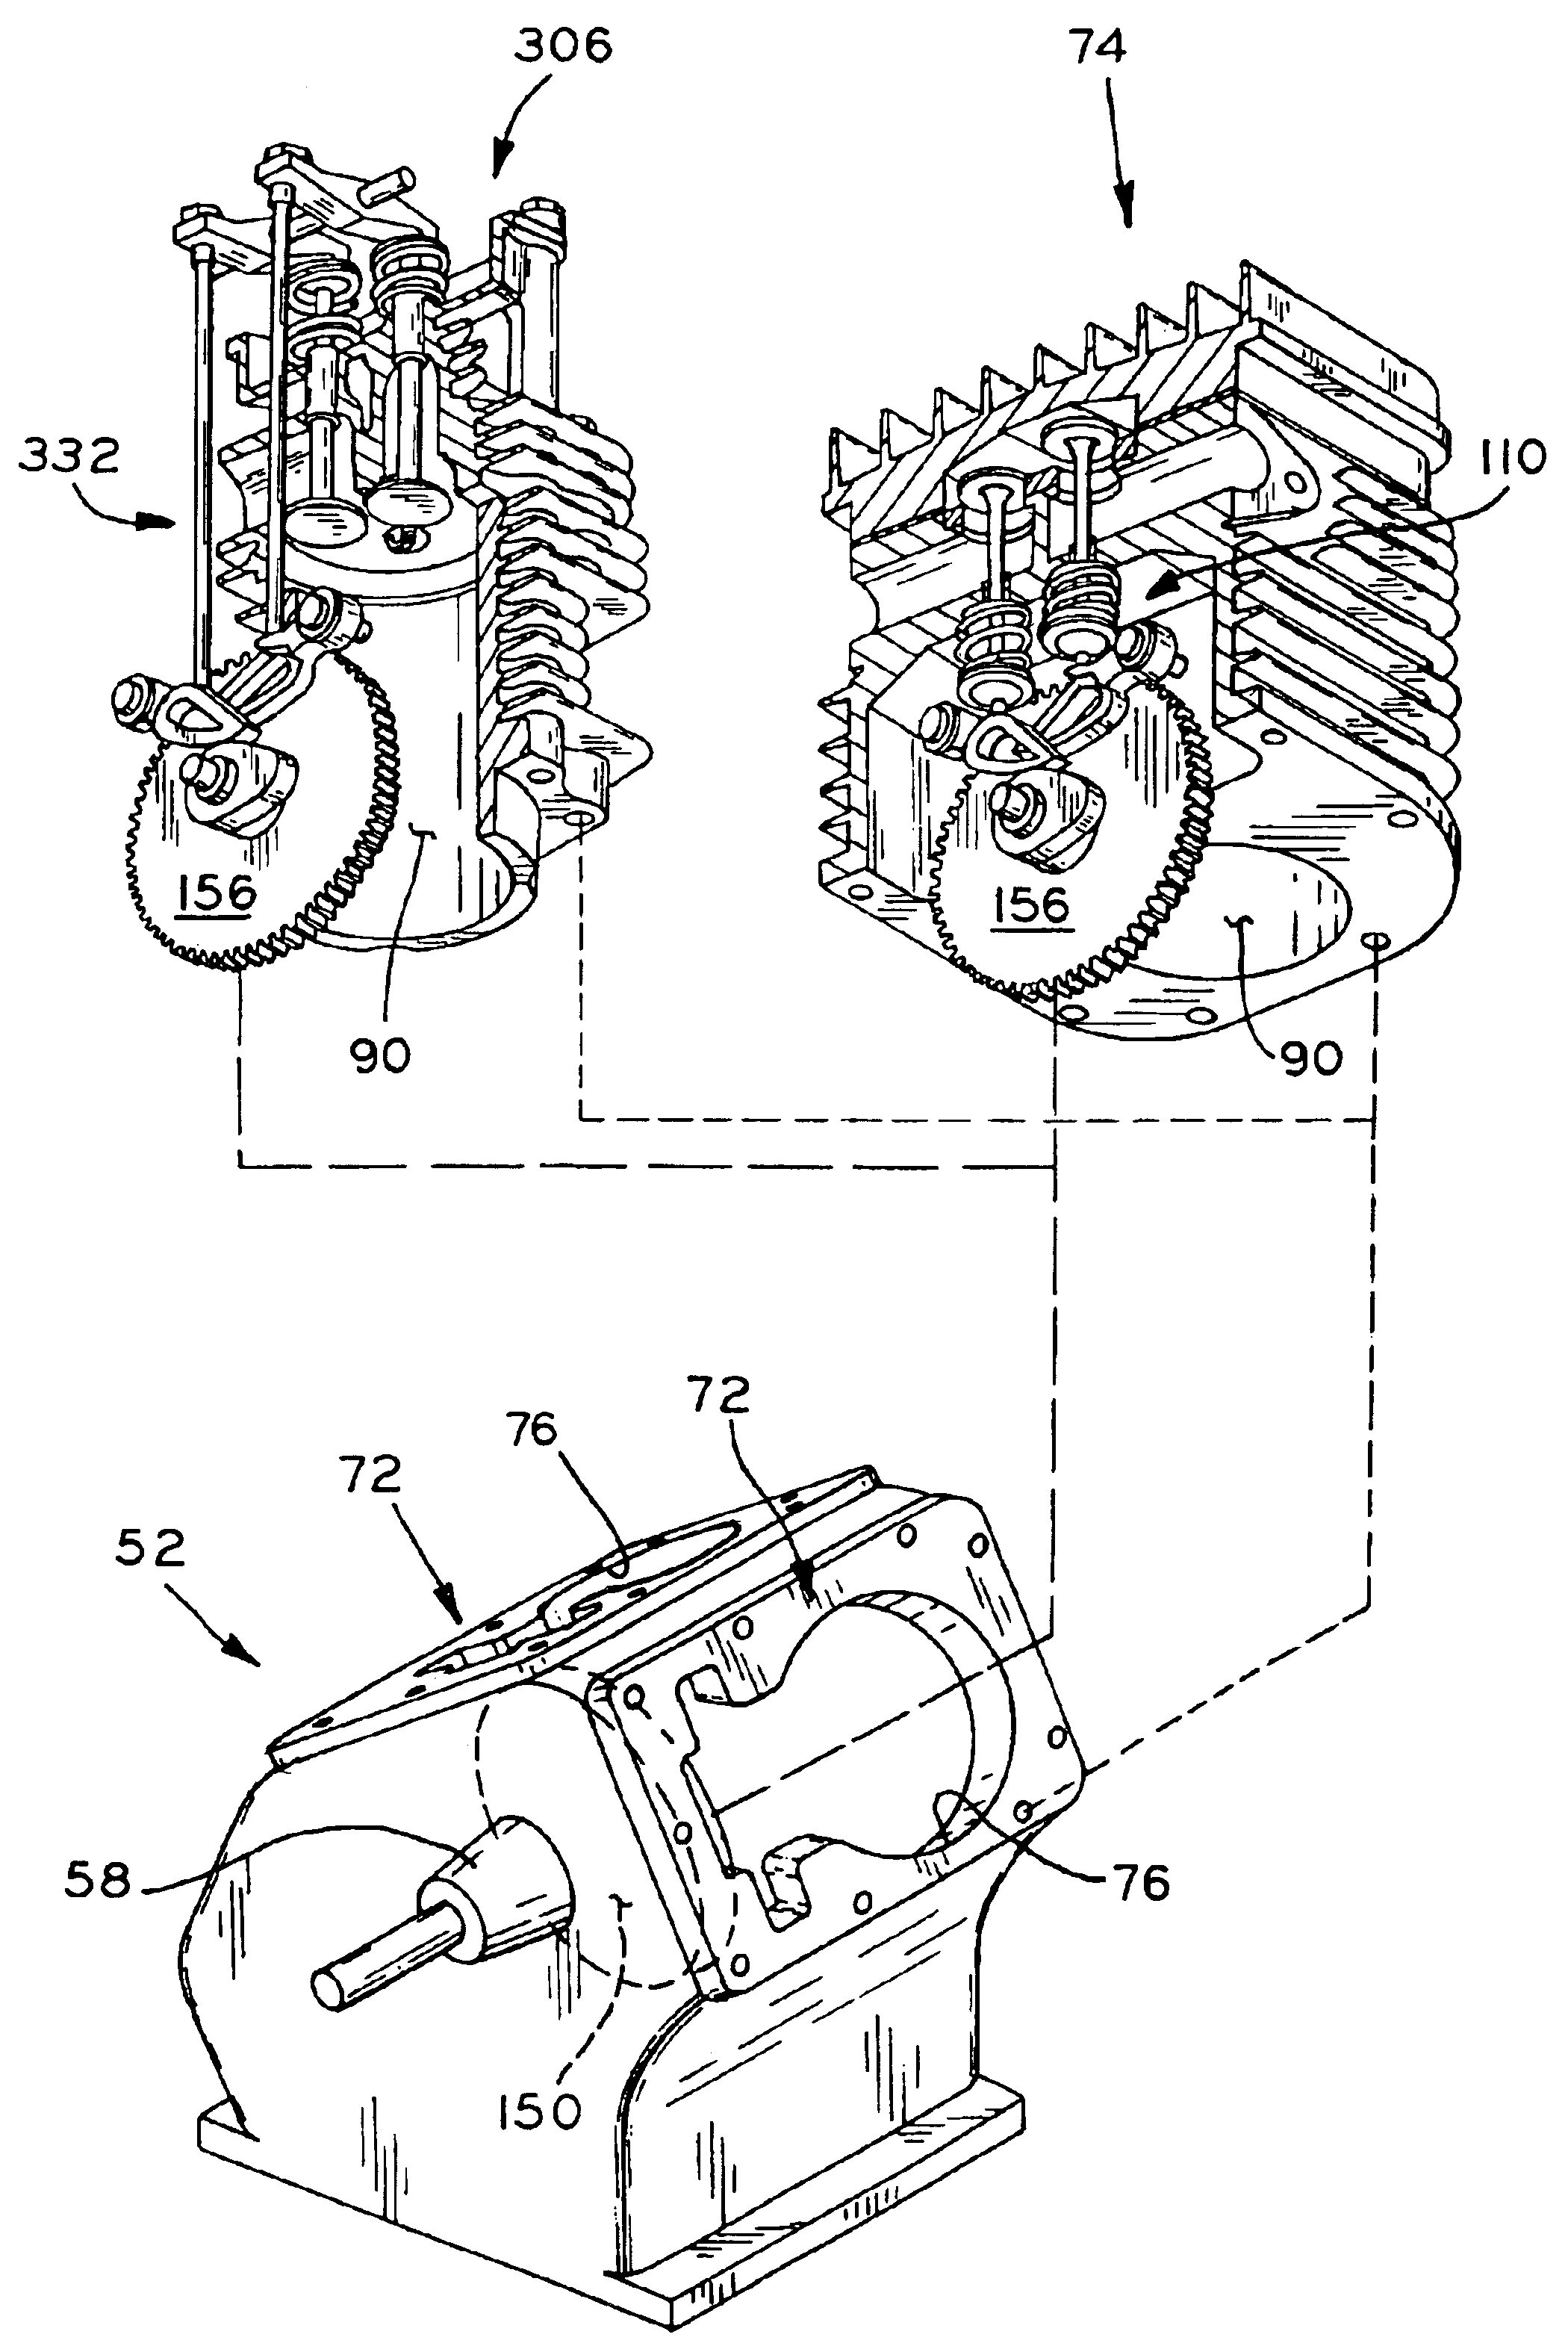 Modular internal combustion engines